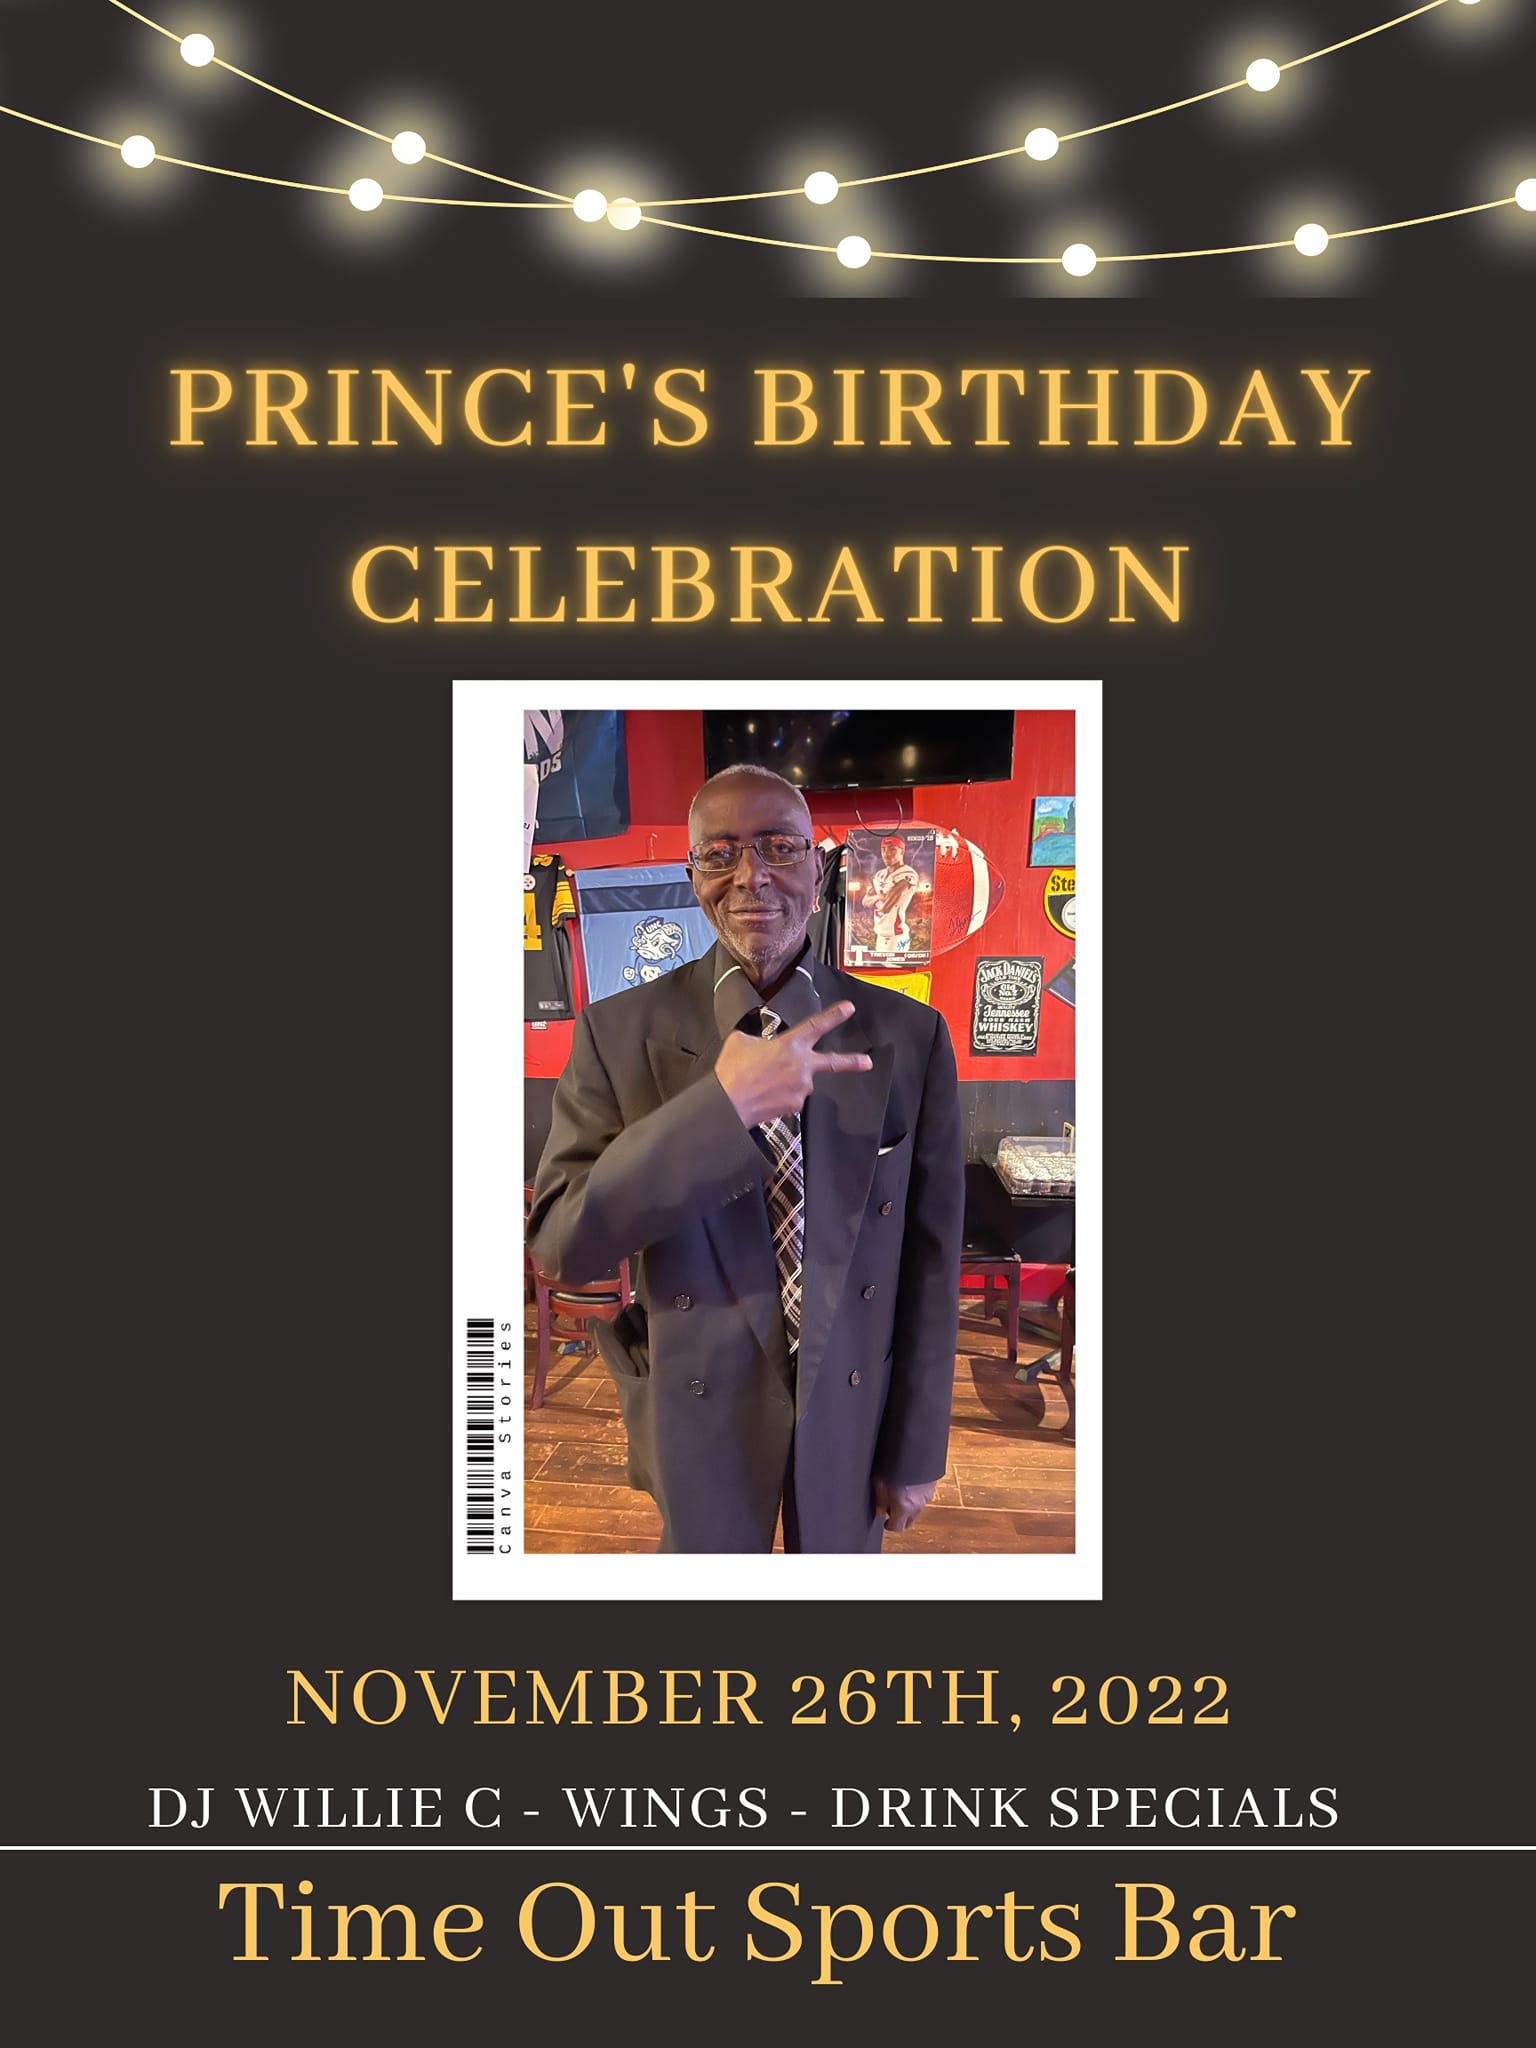 princes birthday time out sports bar warrenton nc november 26